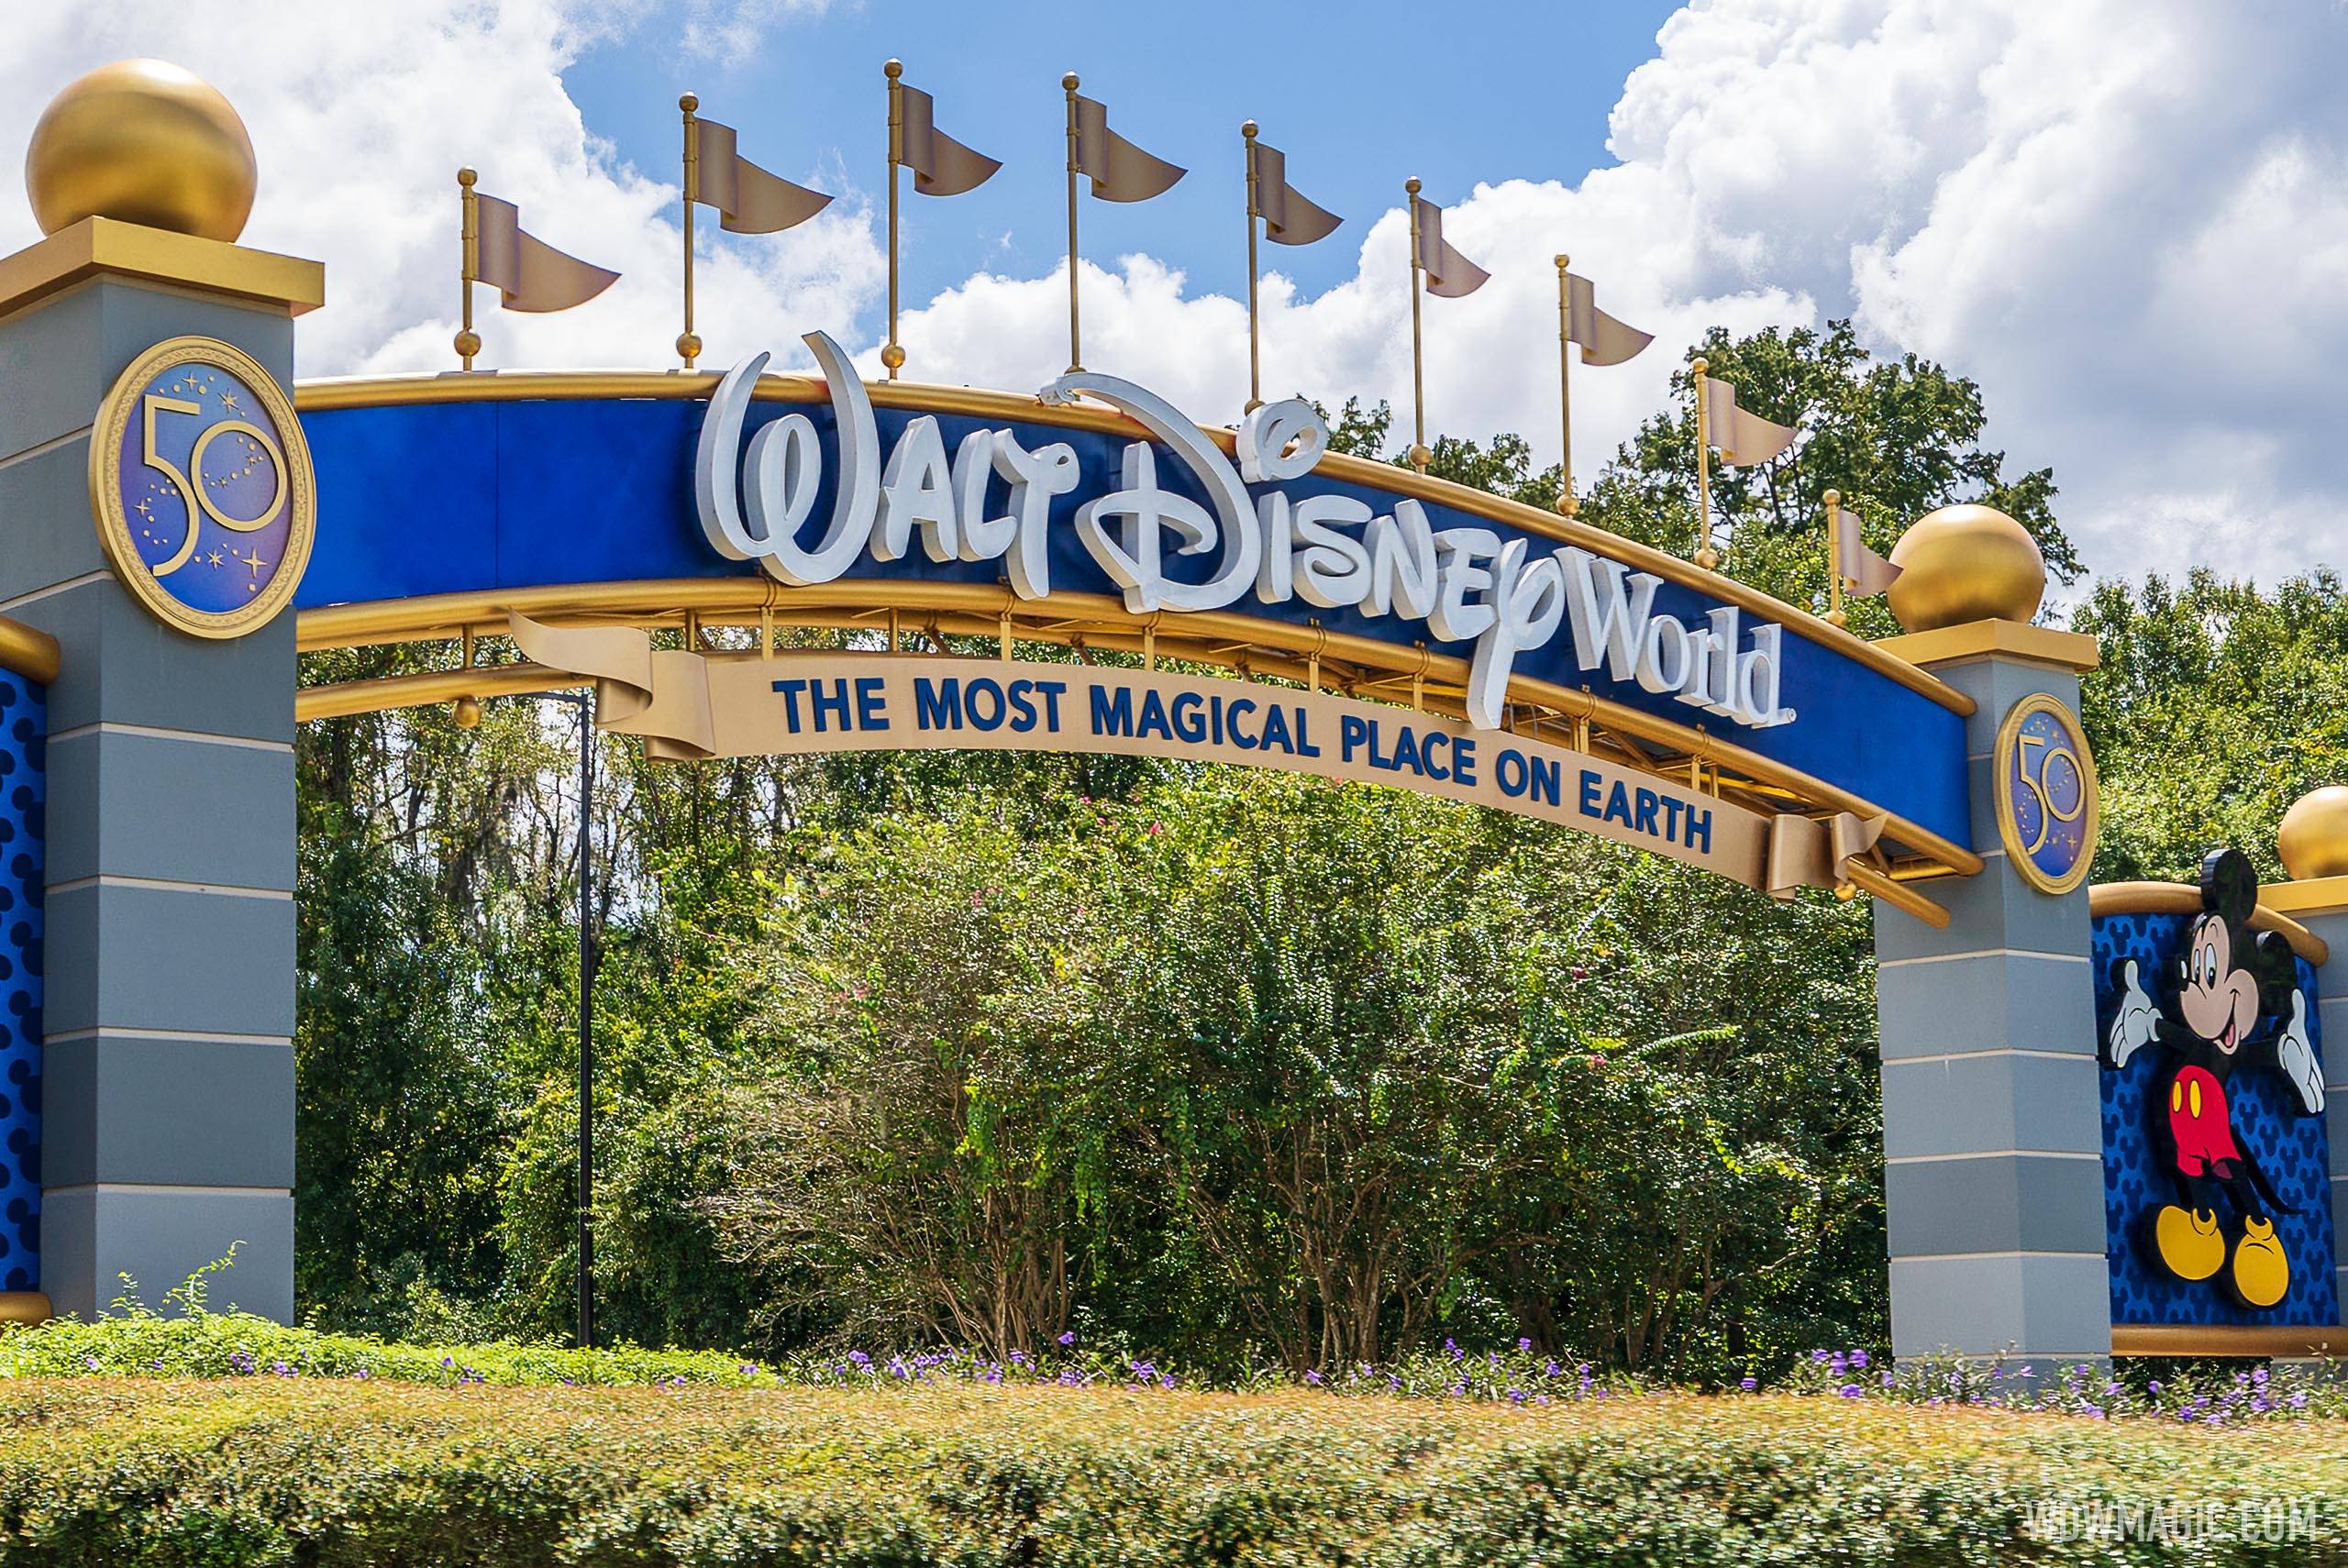 50th-anniversary crest added to Walt Disney World's entrance gateways